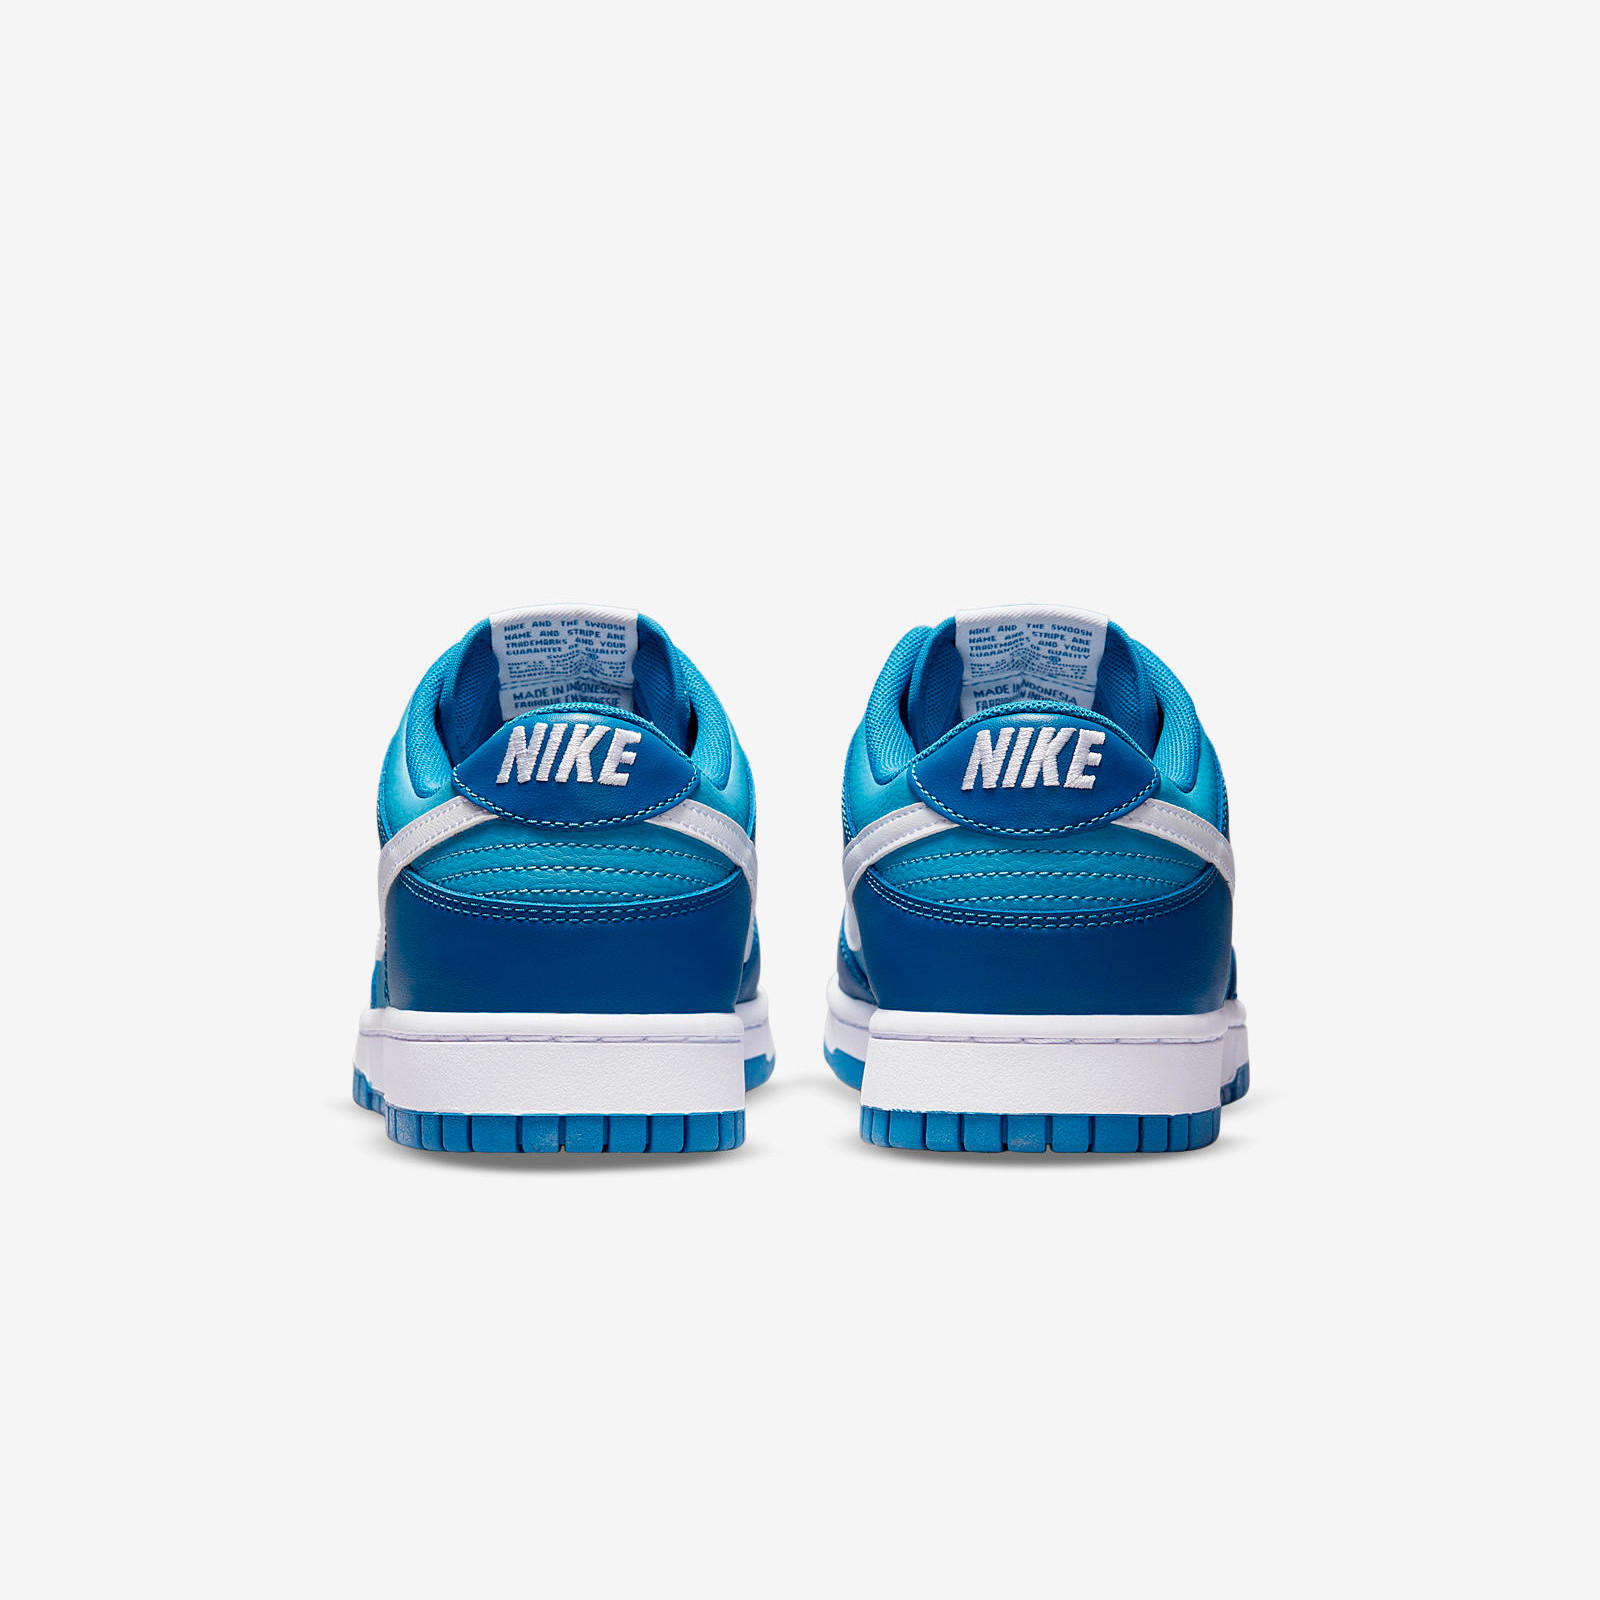 Nike Dunk Low
« Dark Marina Blue »